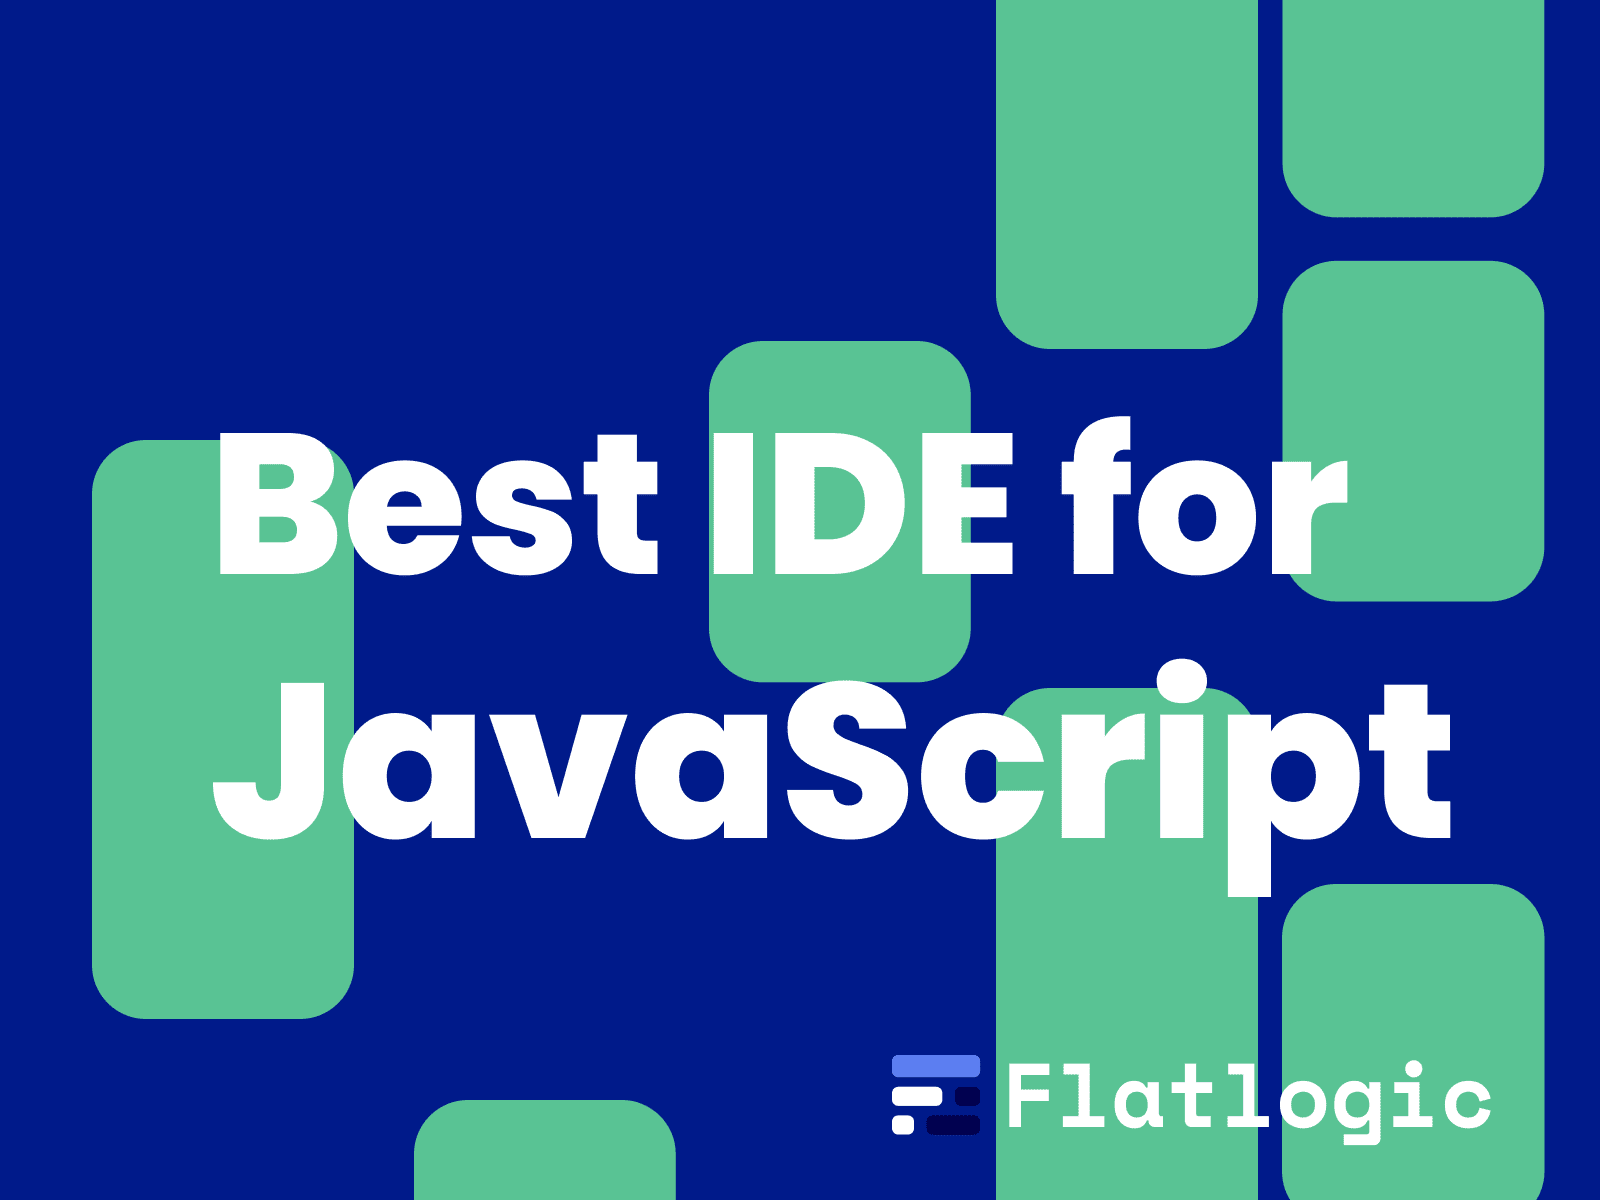 Best IDE for JavaScript